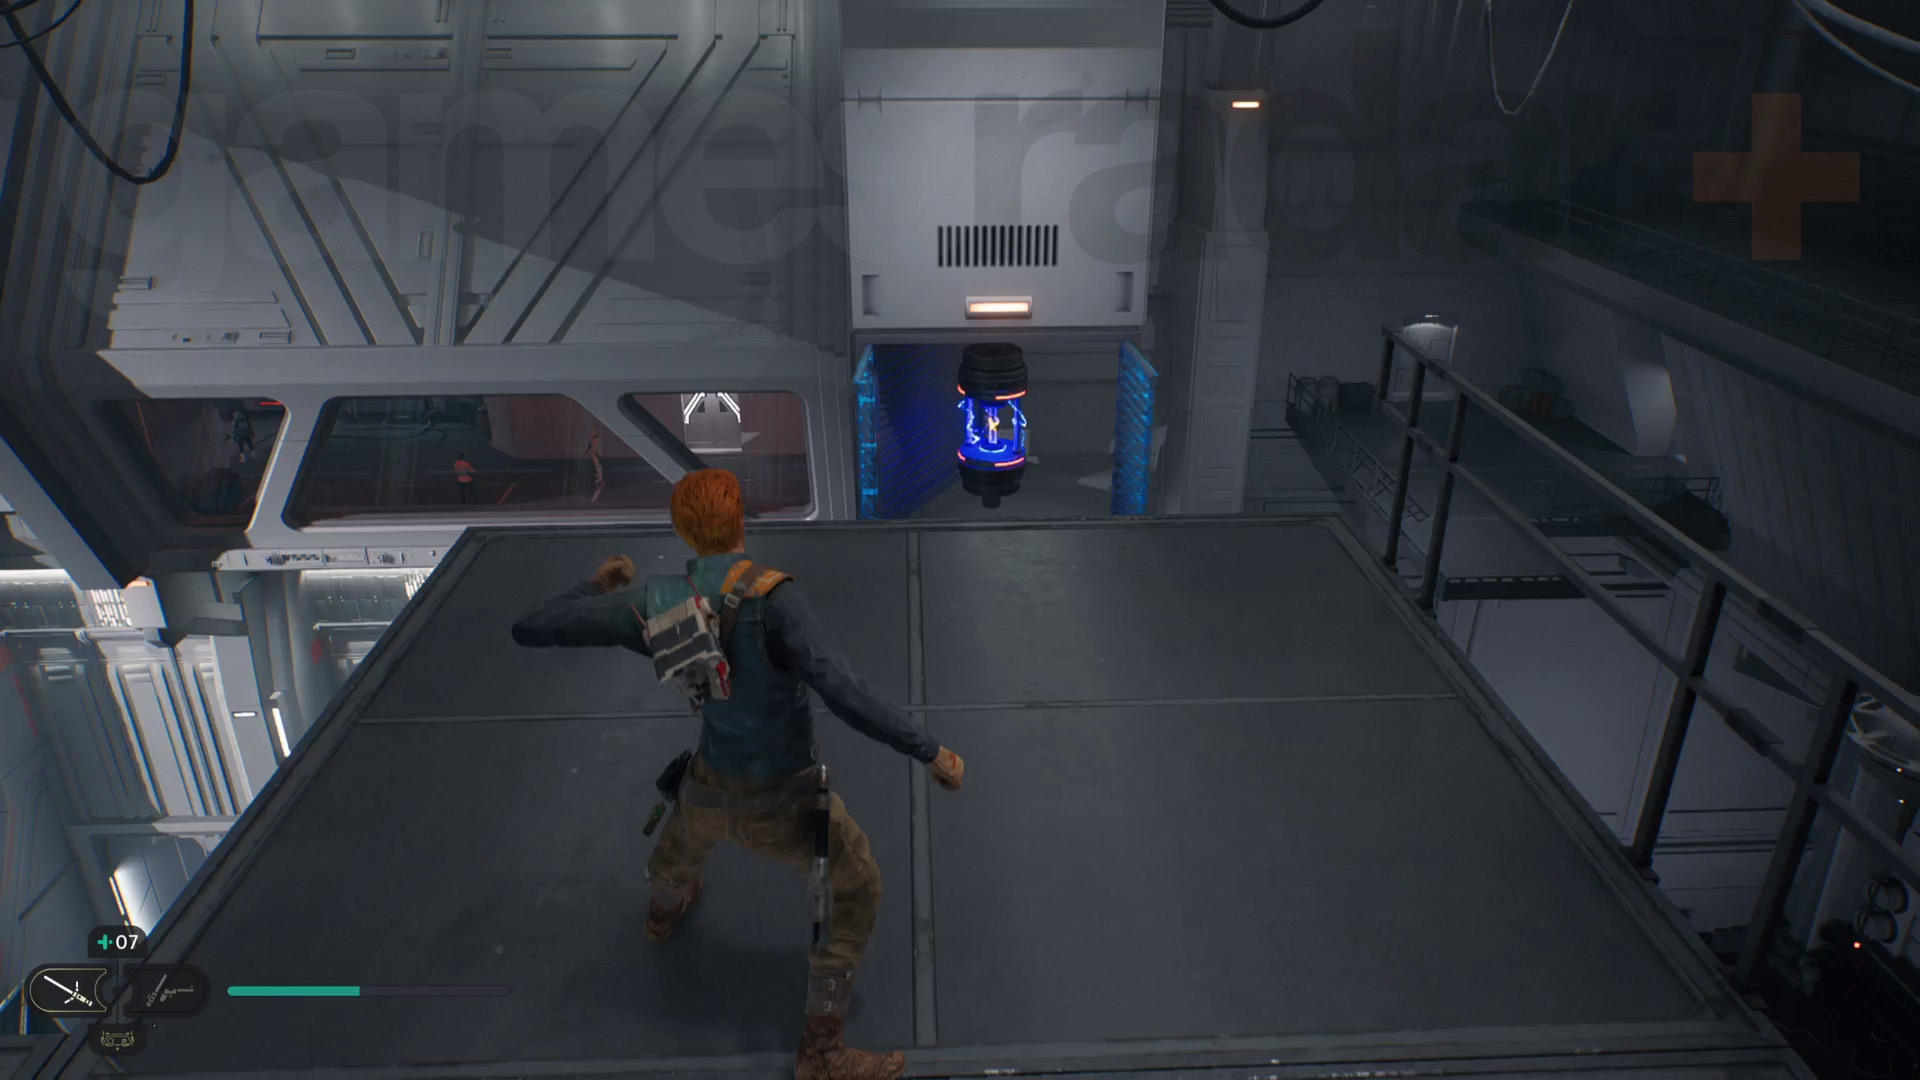 Star Wars الناجي Jedi Nova Garon تجول في Cal يقف على المستوى العلوي من حظيرة الطائرات التي تنظر إلى أسفل مصدر طاقة متوهج في صندوق